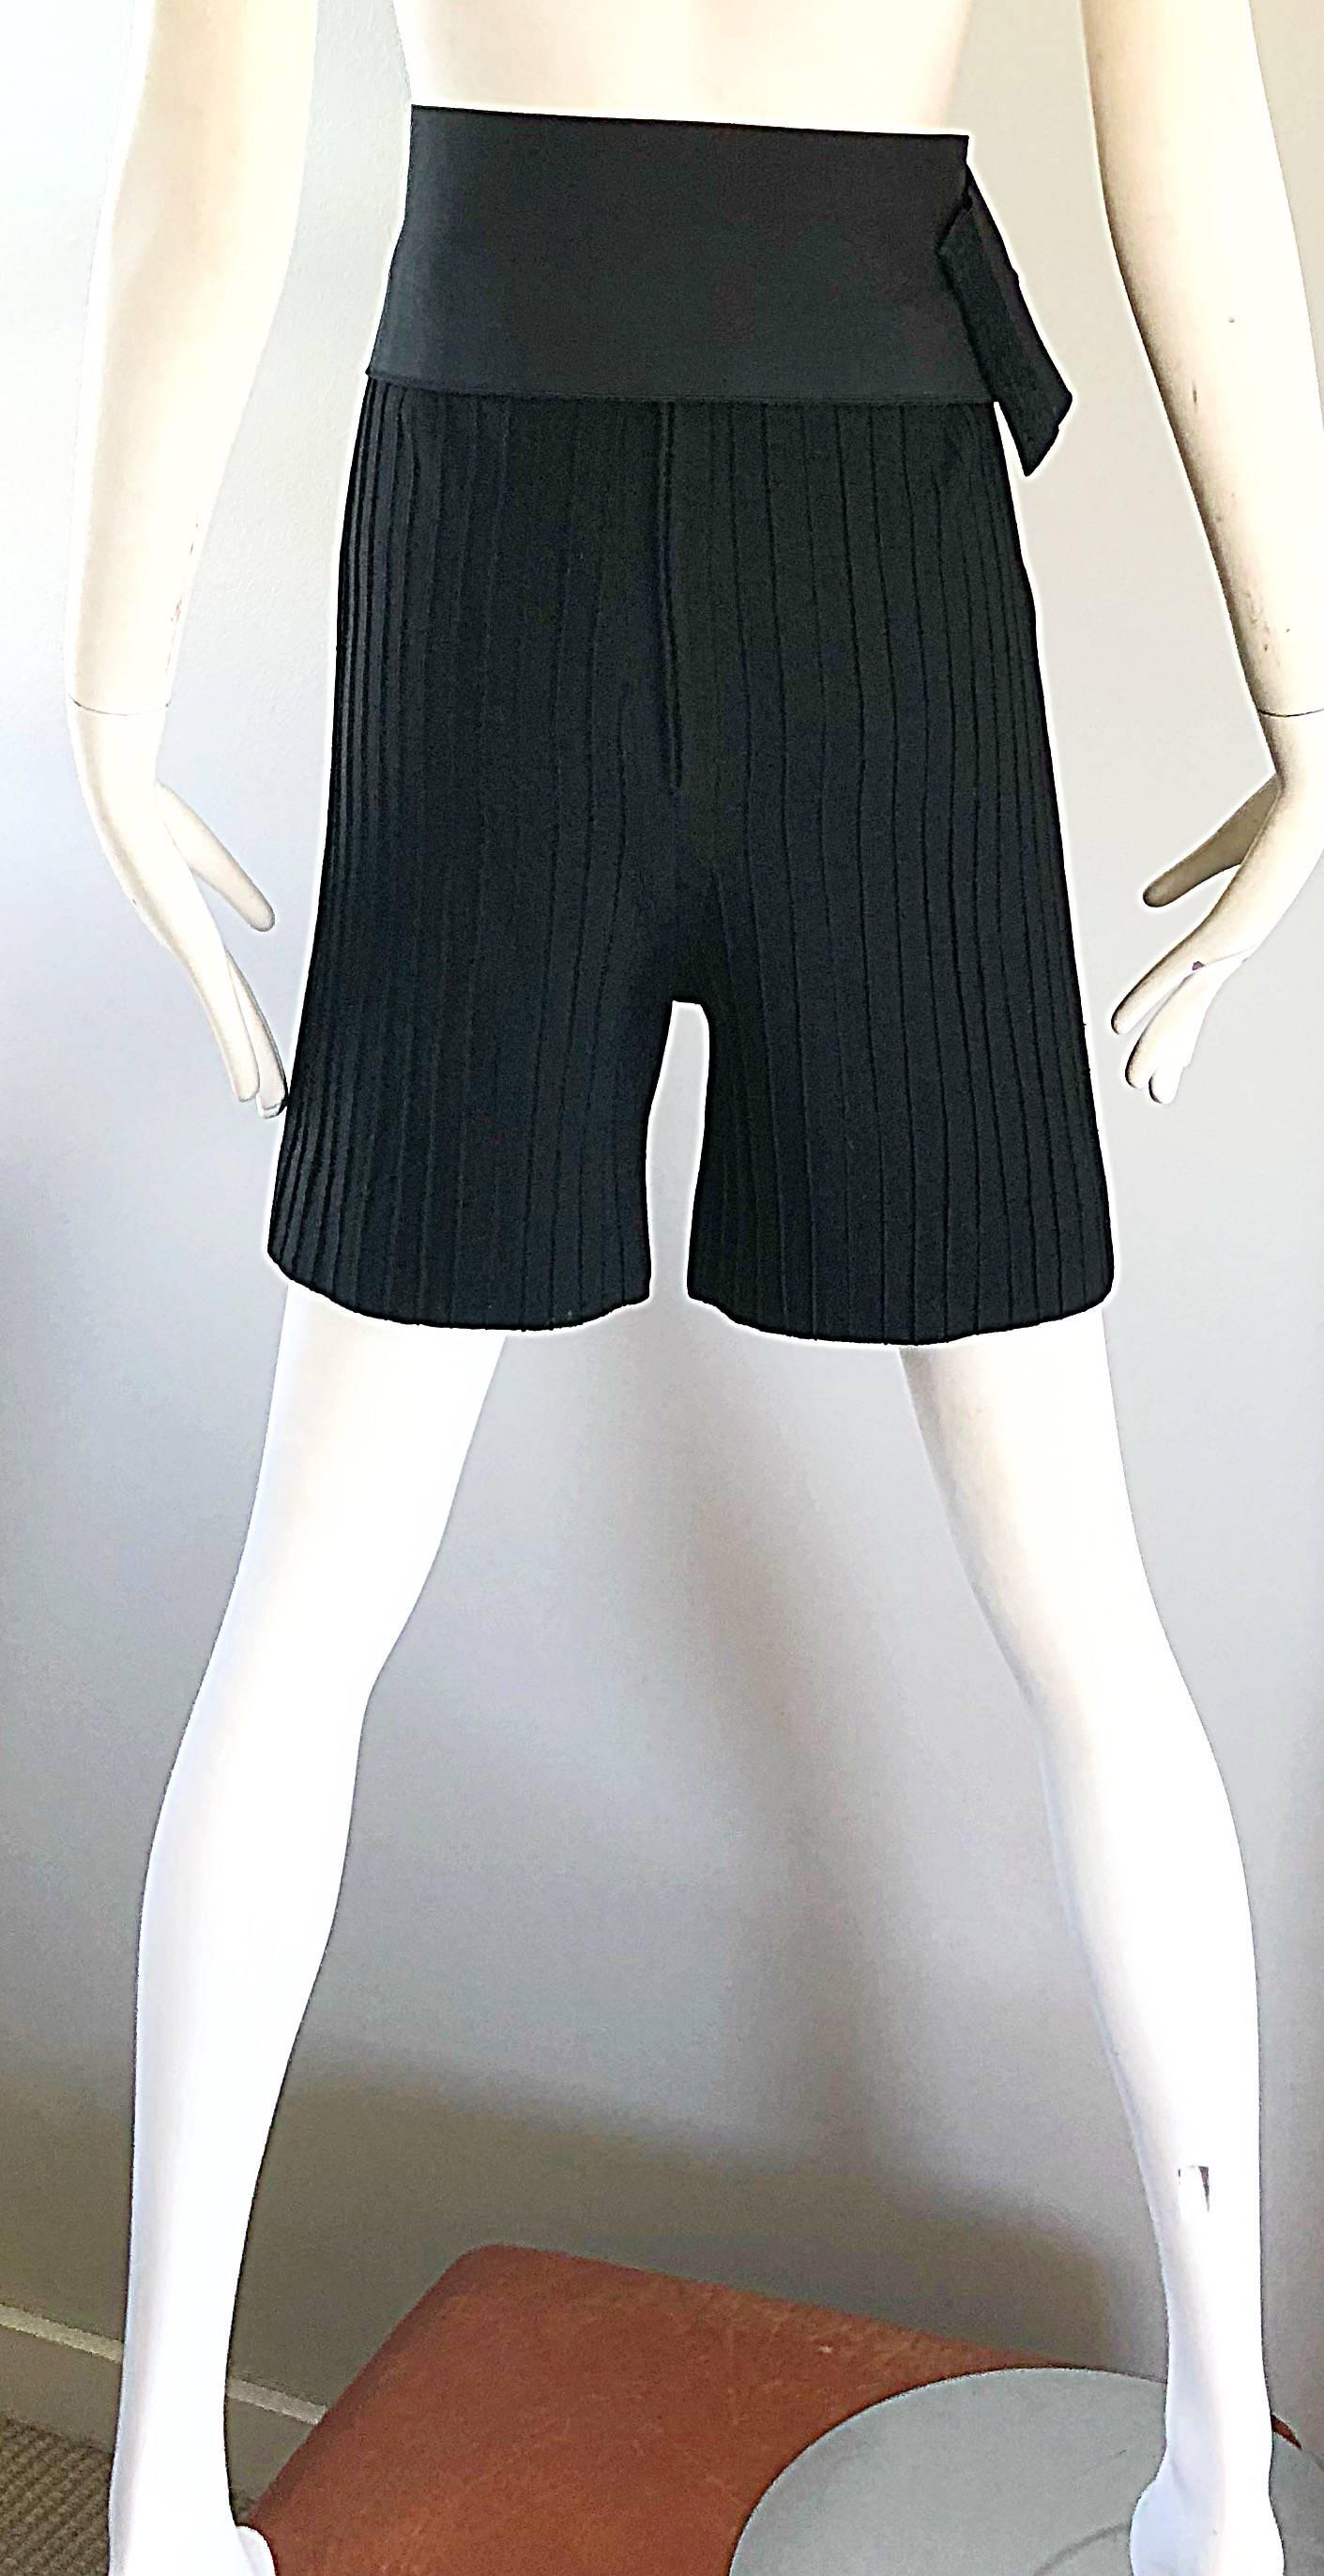 Cardinali Original Sample Black Wool High Waisted 1960s Shorts and Belt Set For Sale 5